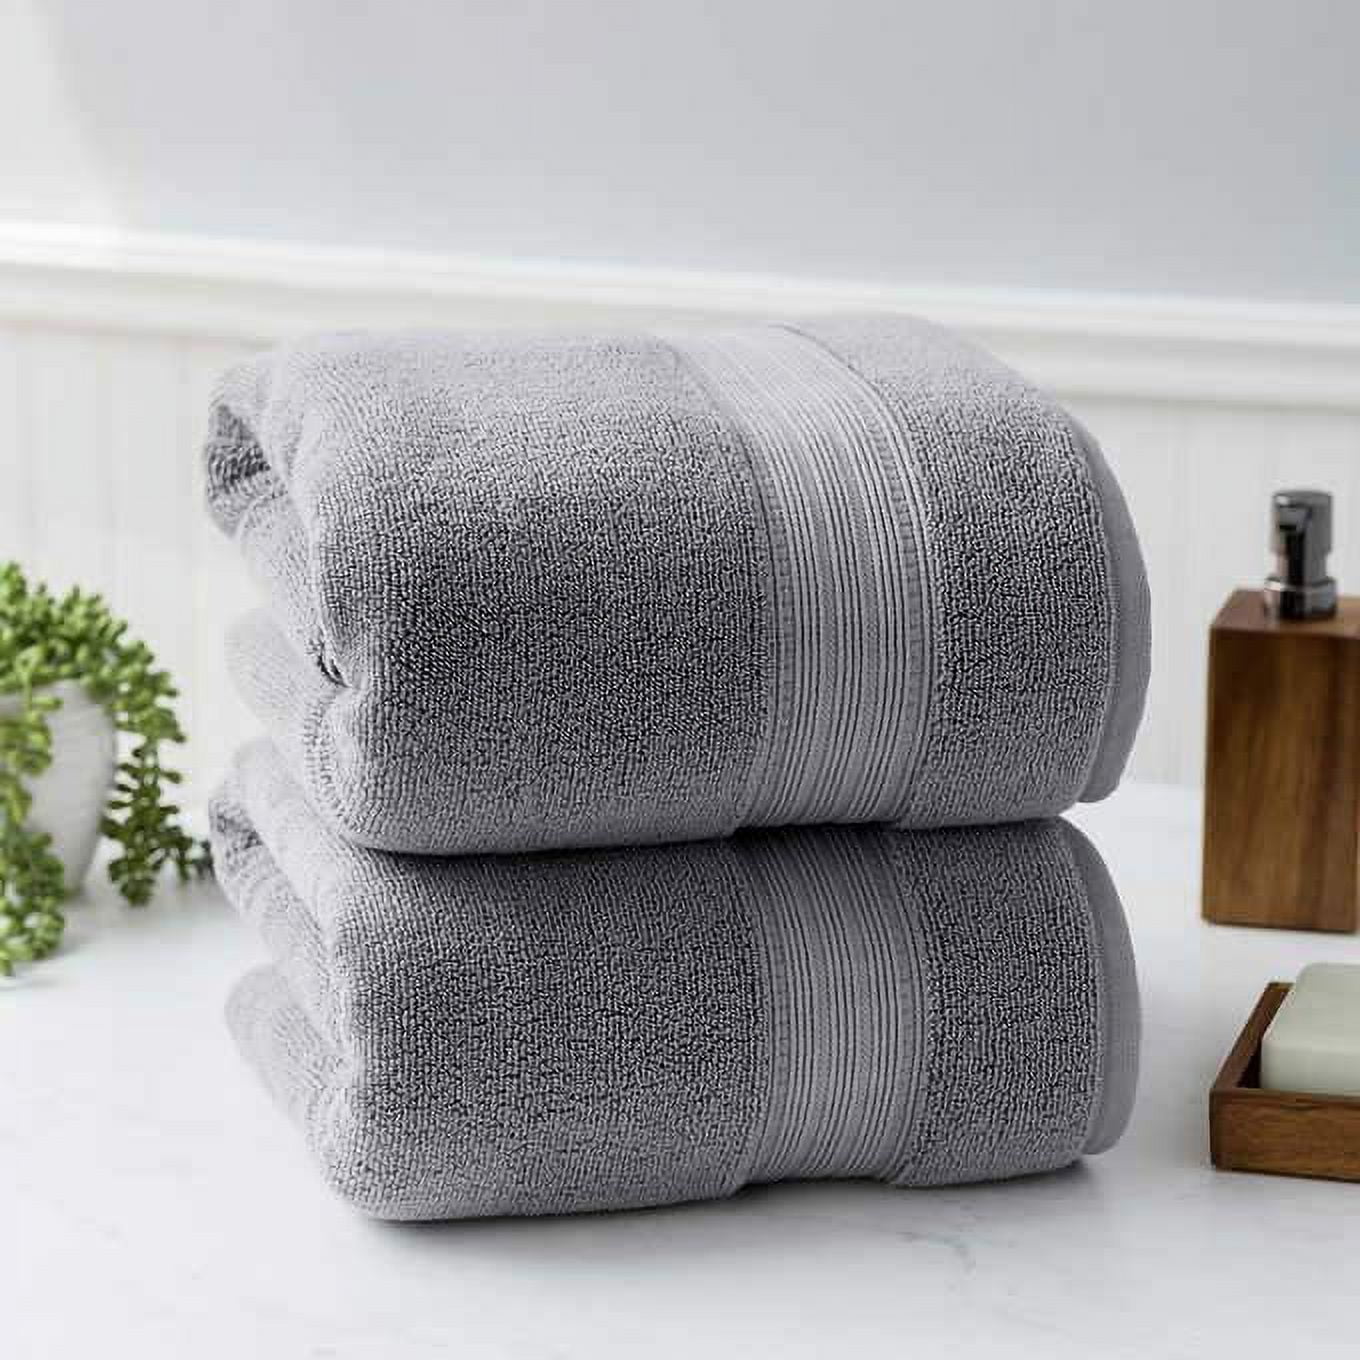 Bargains by Green - Charisma Bath Towel - 100% Hygro Cotton, 30 x